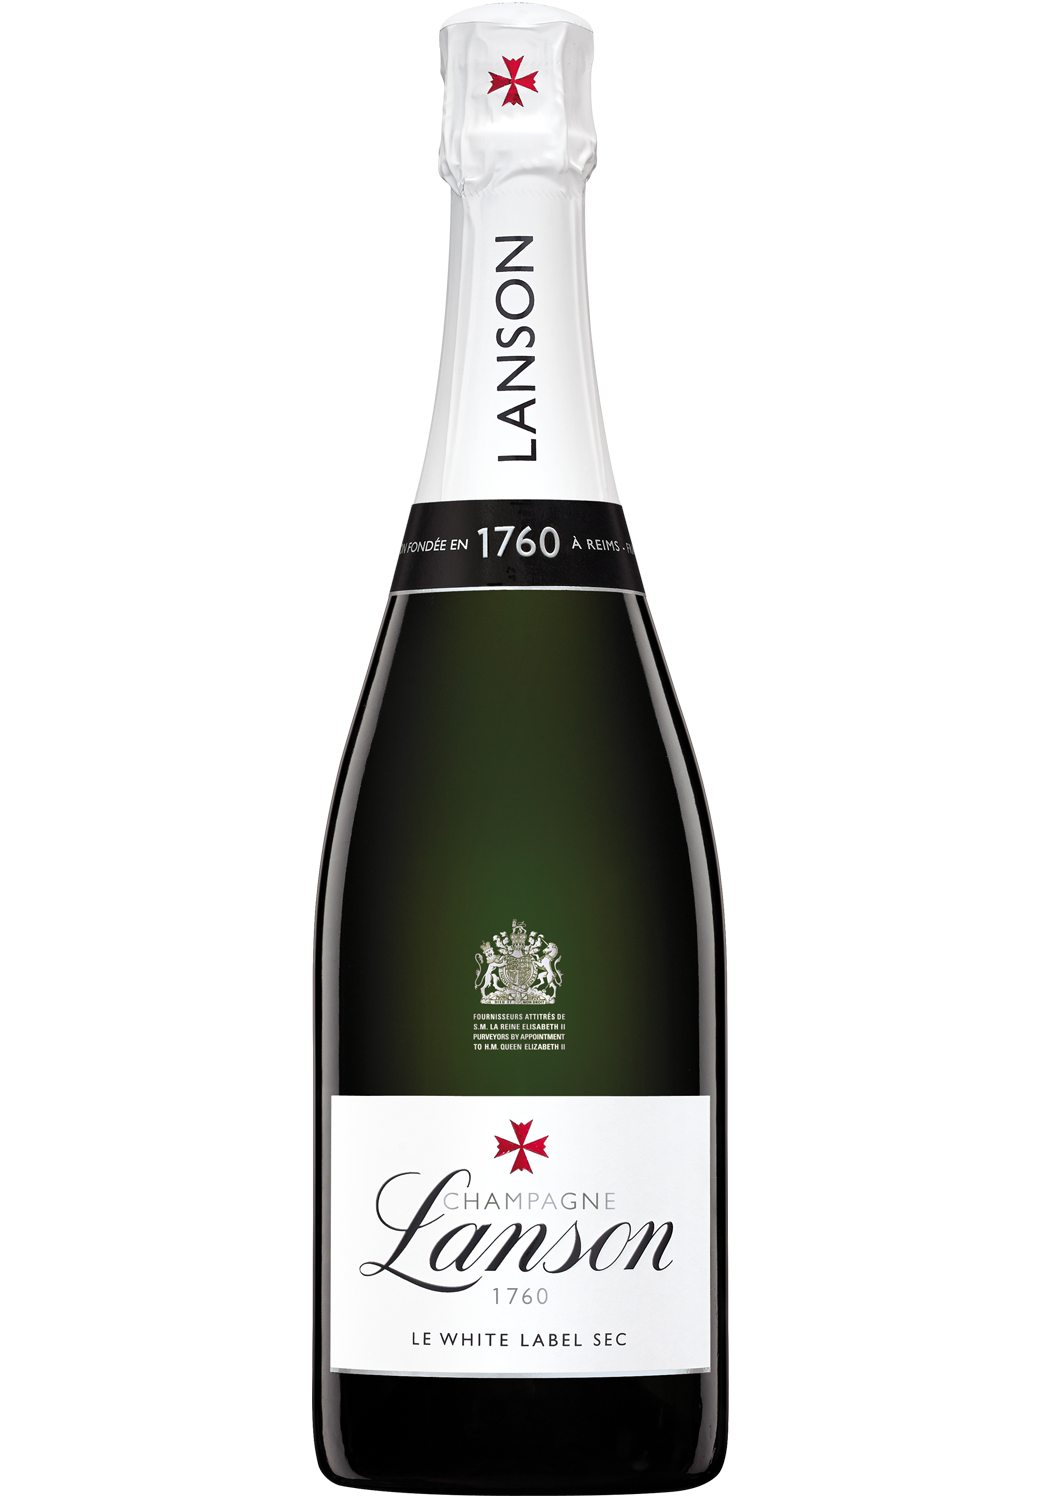 Lanson bottle